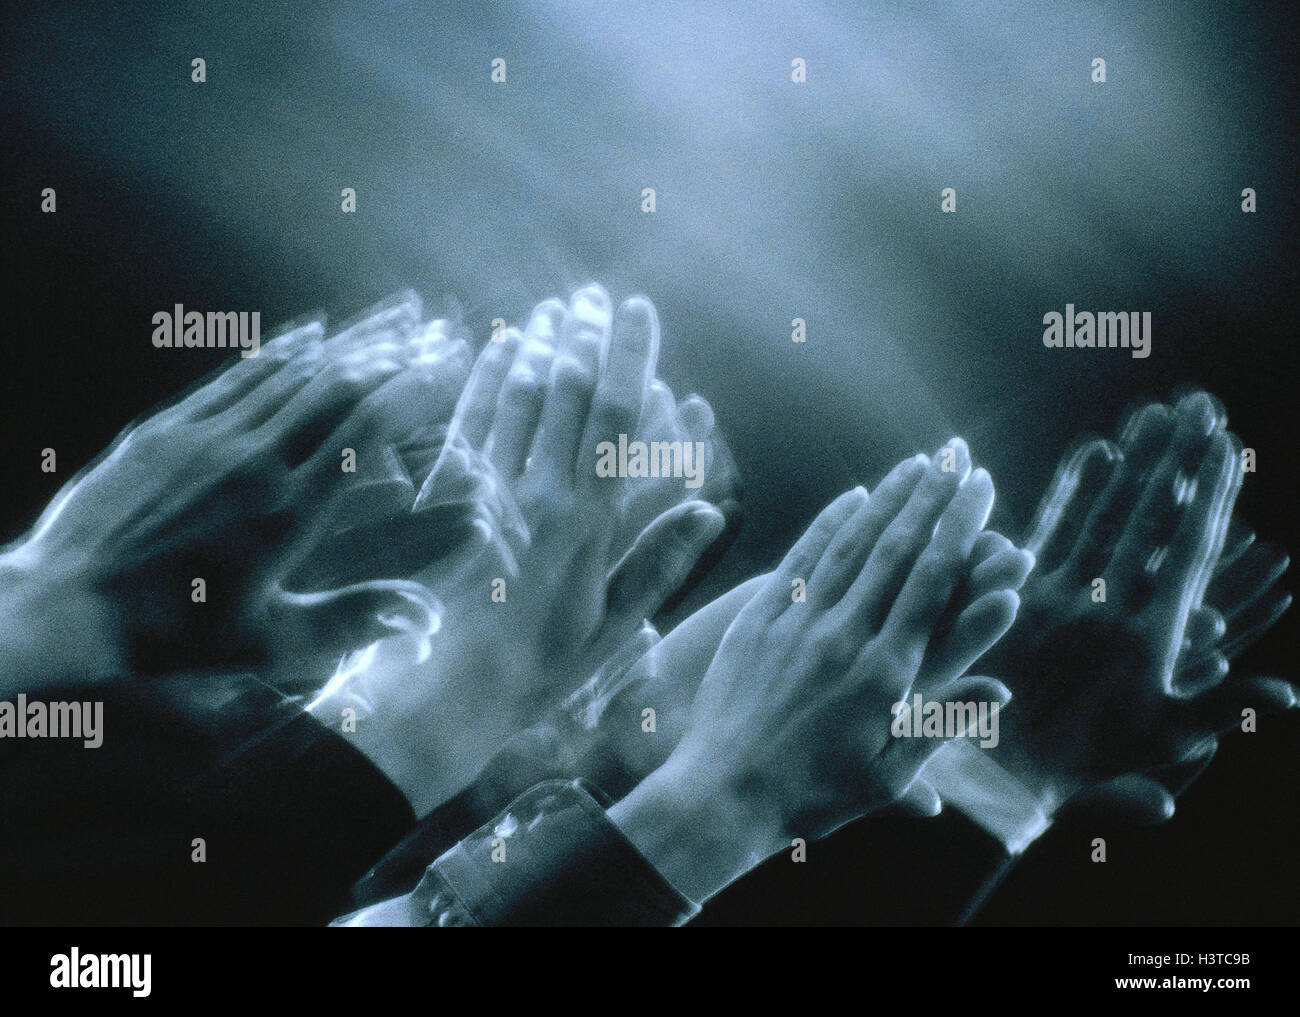 Blur makes unfamiliar hands, applause, b/w, motion, applaud, clap, cheering, Bravo!, applause Stock Photo